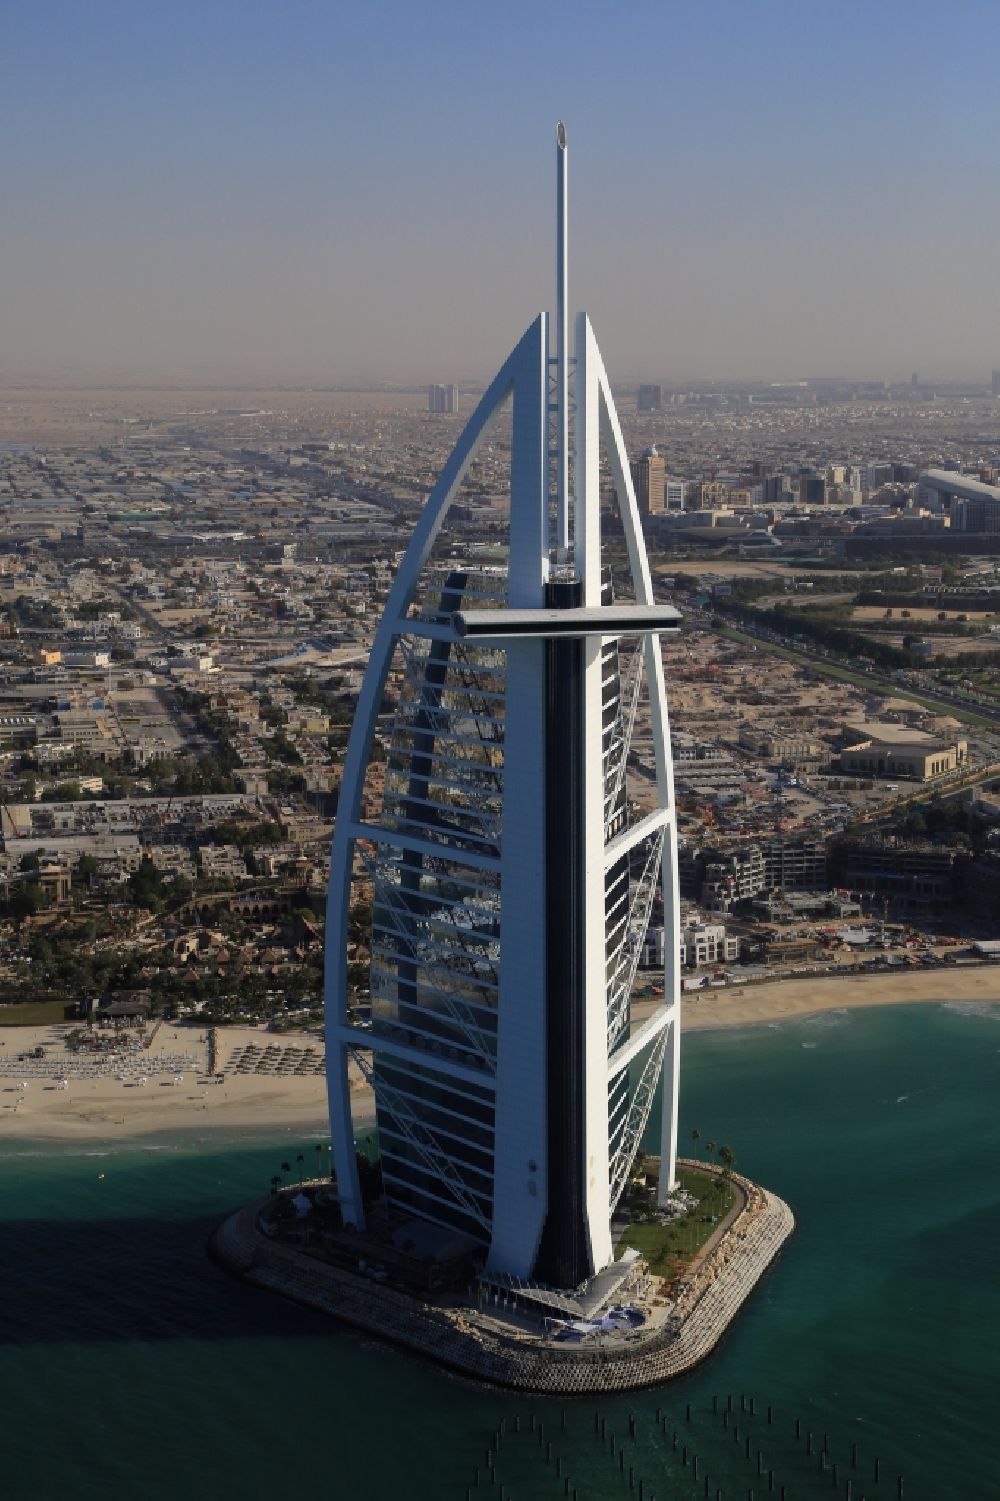 Aerial image Dubai - Burj Al Arab is landmark and symbol of Dubai in United Arab Emirates